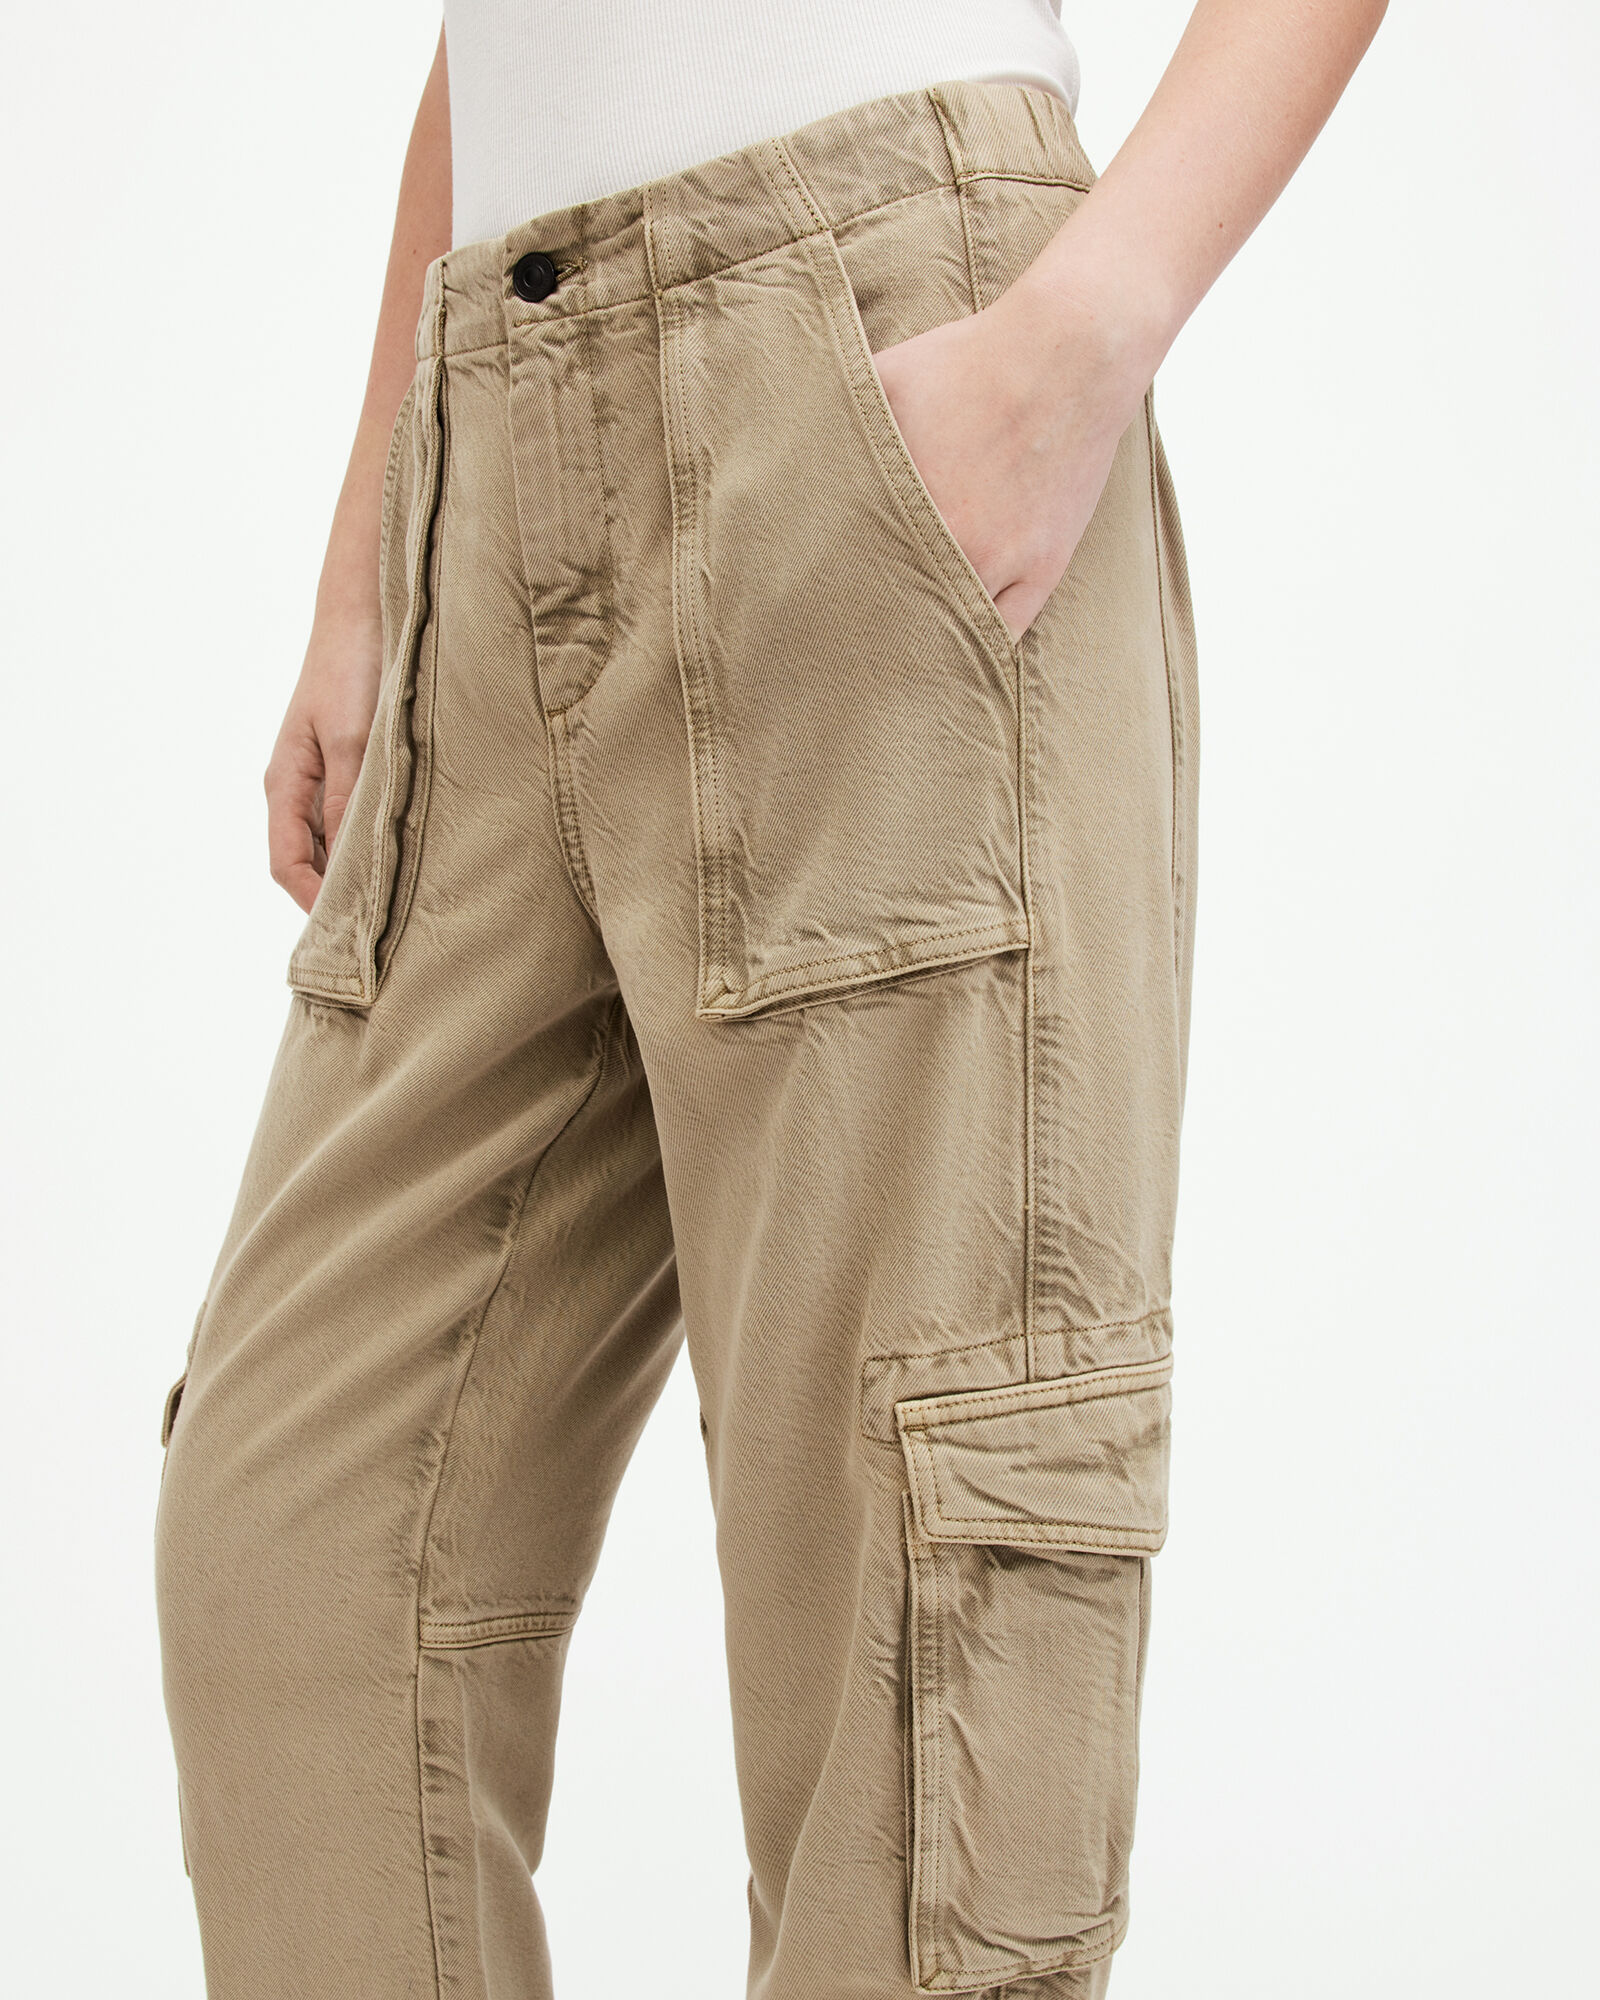 Women's Cargo Trousers,Women Casual Fashion High Waisted Cargo Pants Wide  Leg Casual Denim Trousers Pants for Women : Sports & Outdoors - Amazon.com